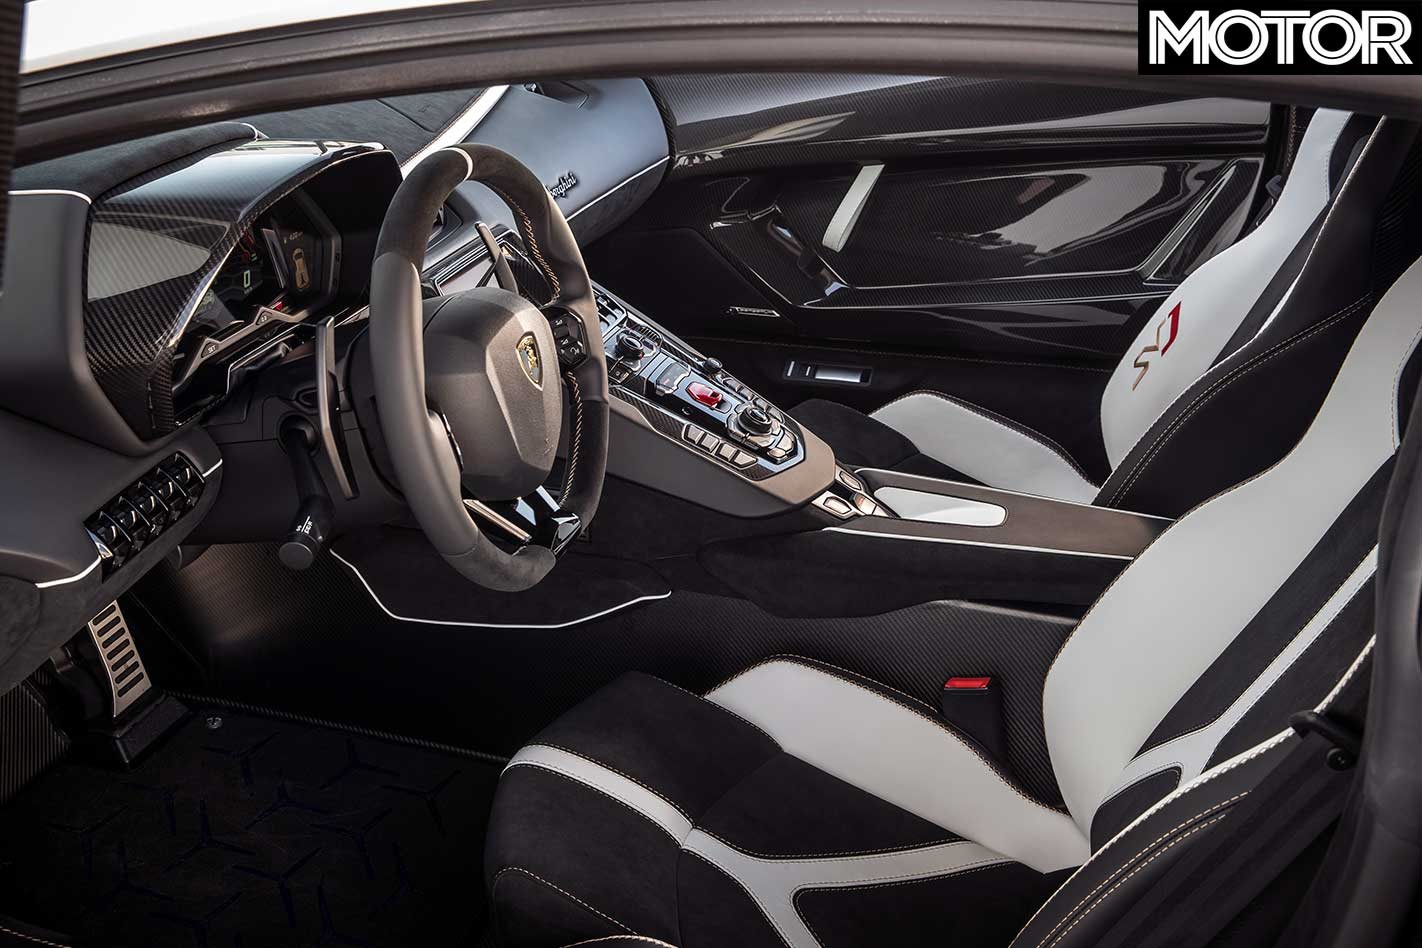 2018 Lamborghini Aventador SVJ performance review | MOTOR ...